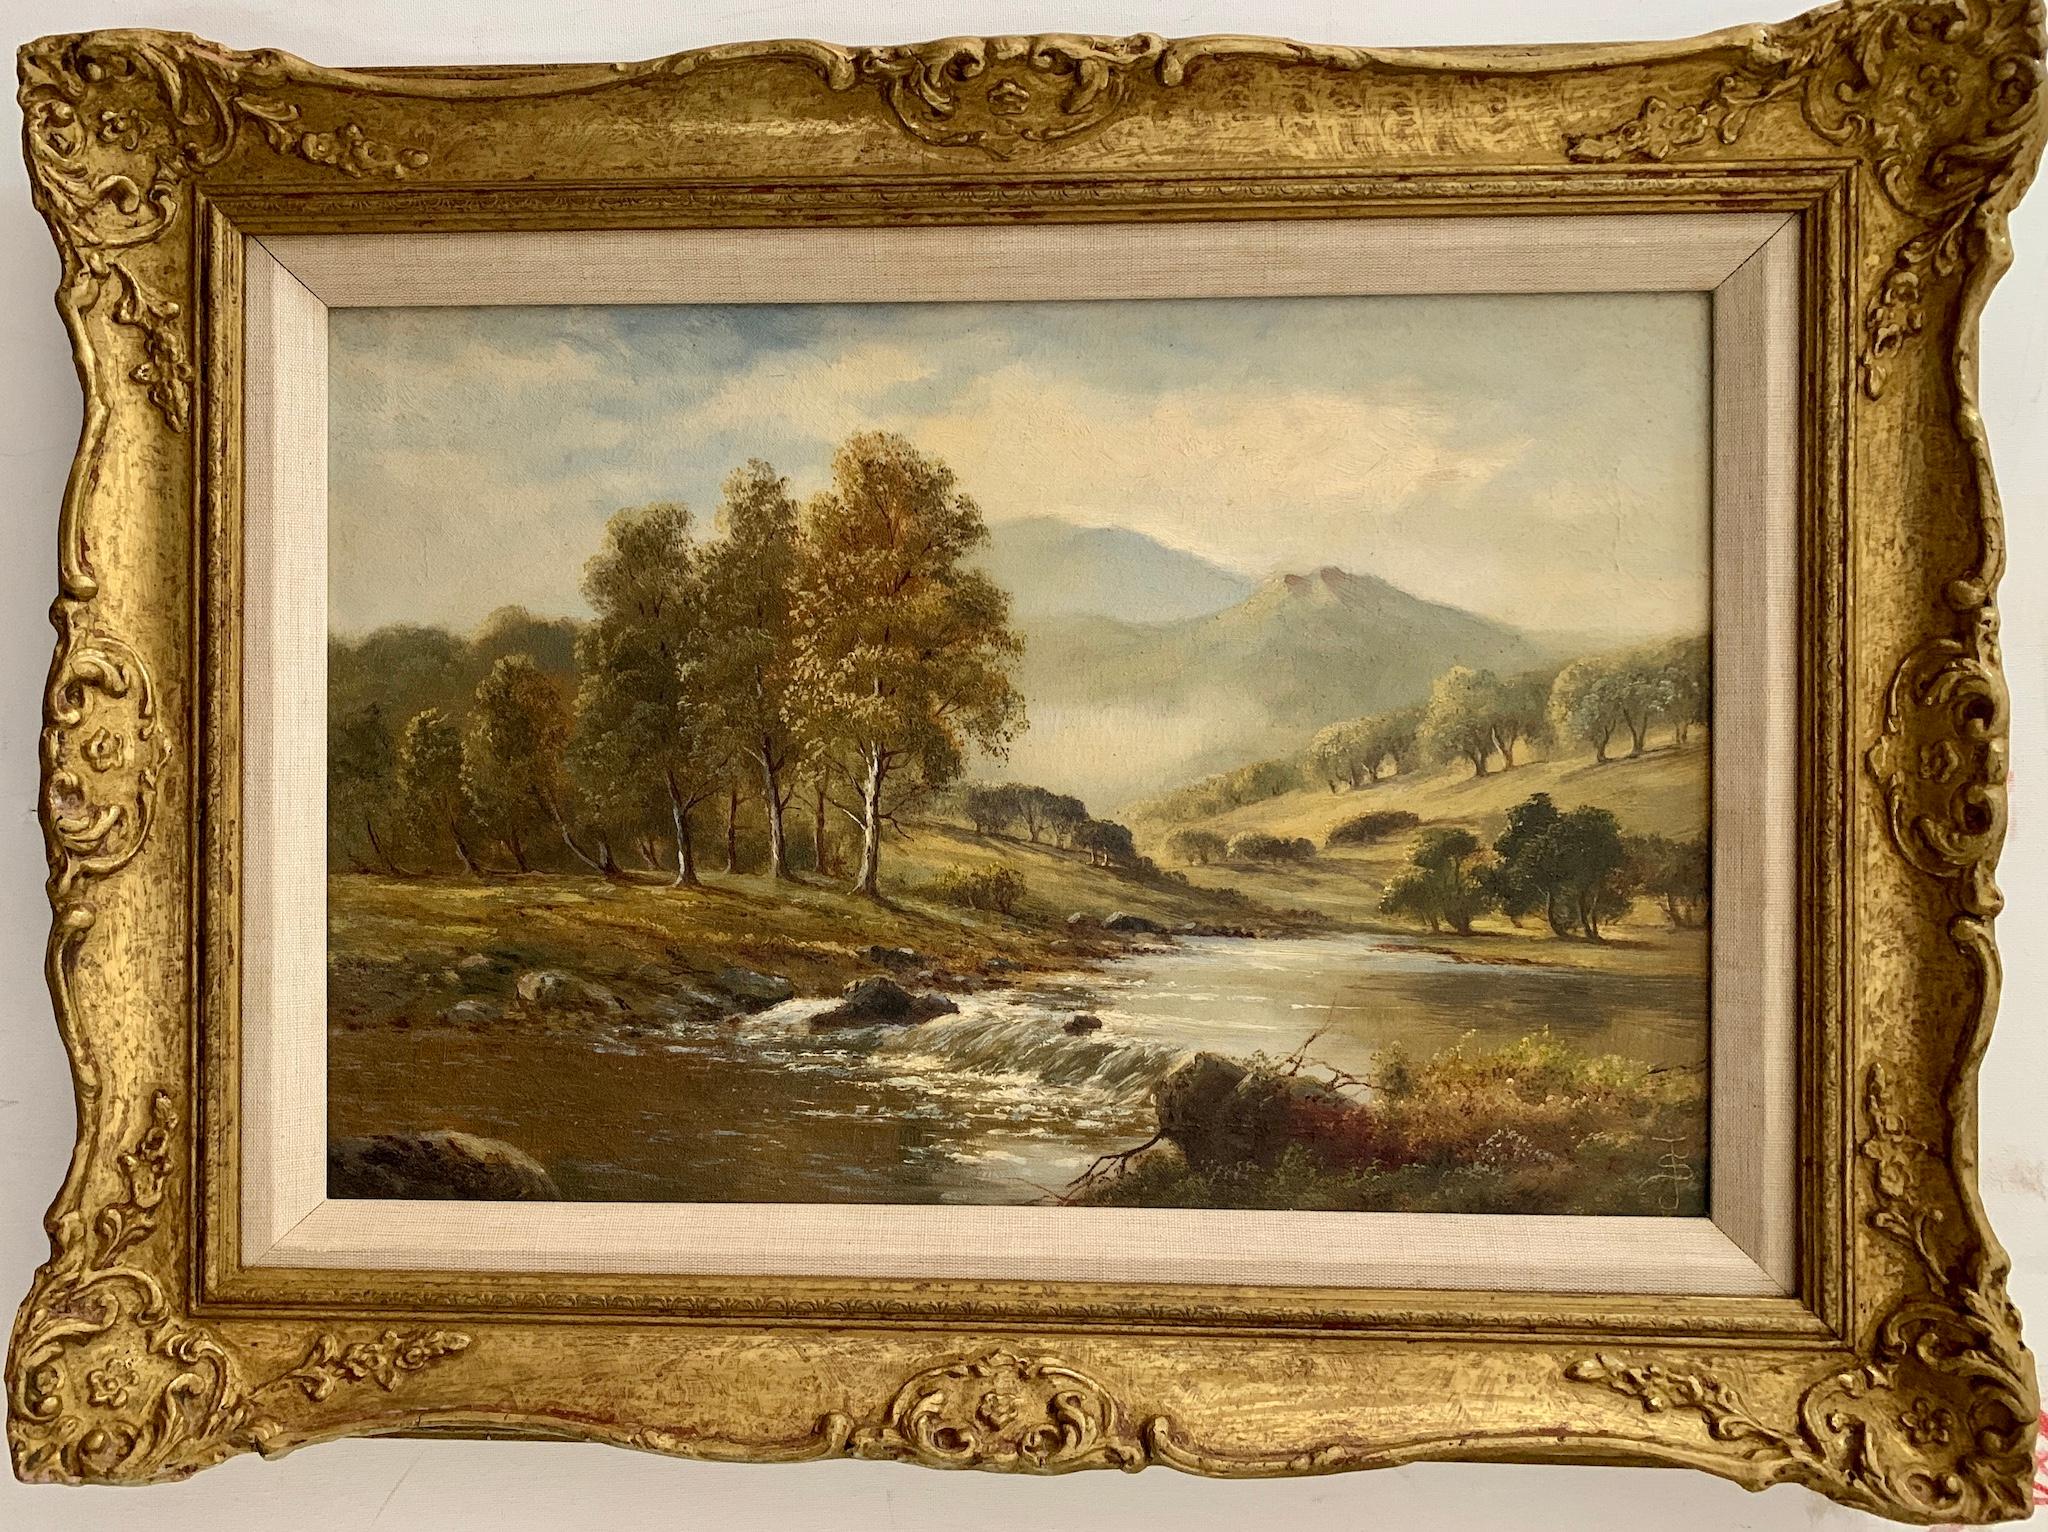 Sidney Yates Johnson Landscape Painting - Early 20th century Scottish Highland landscape, the Trossachs, Scotland